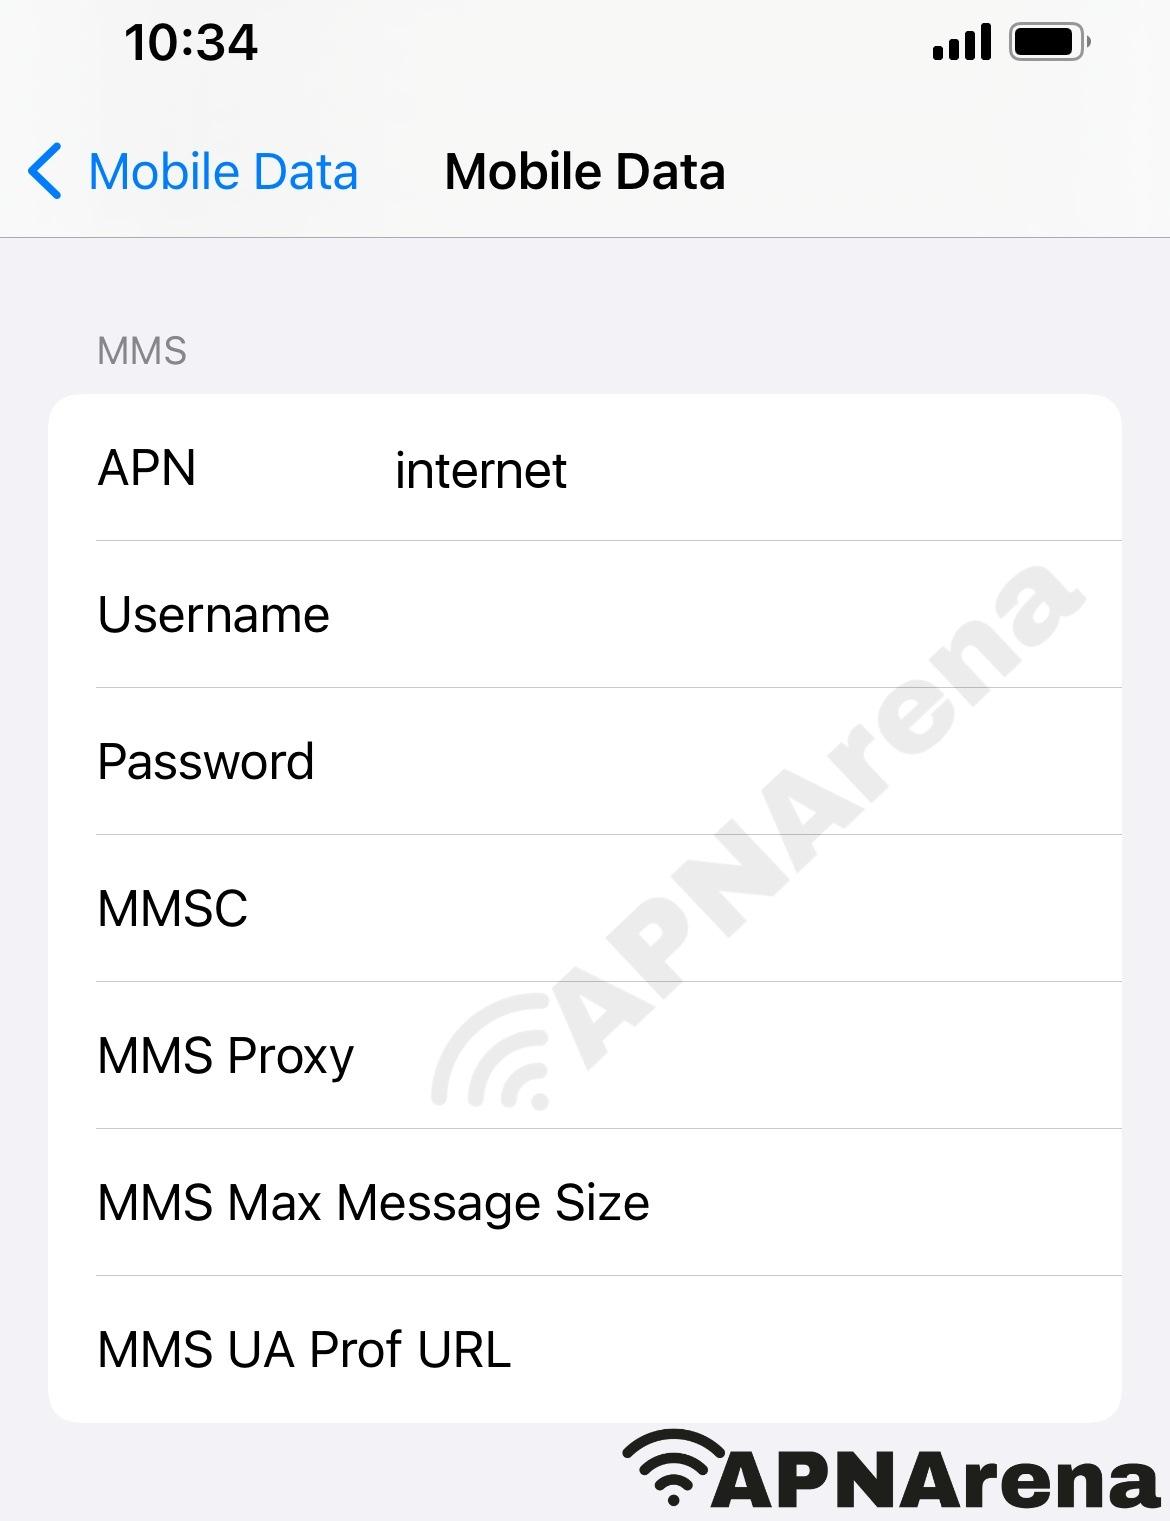 Jadoo Mobile MMS Settings for iPhone